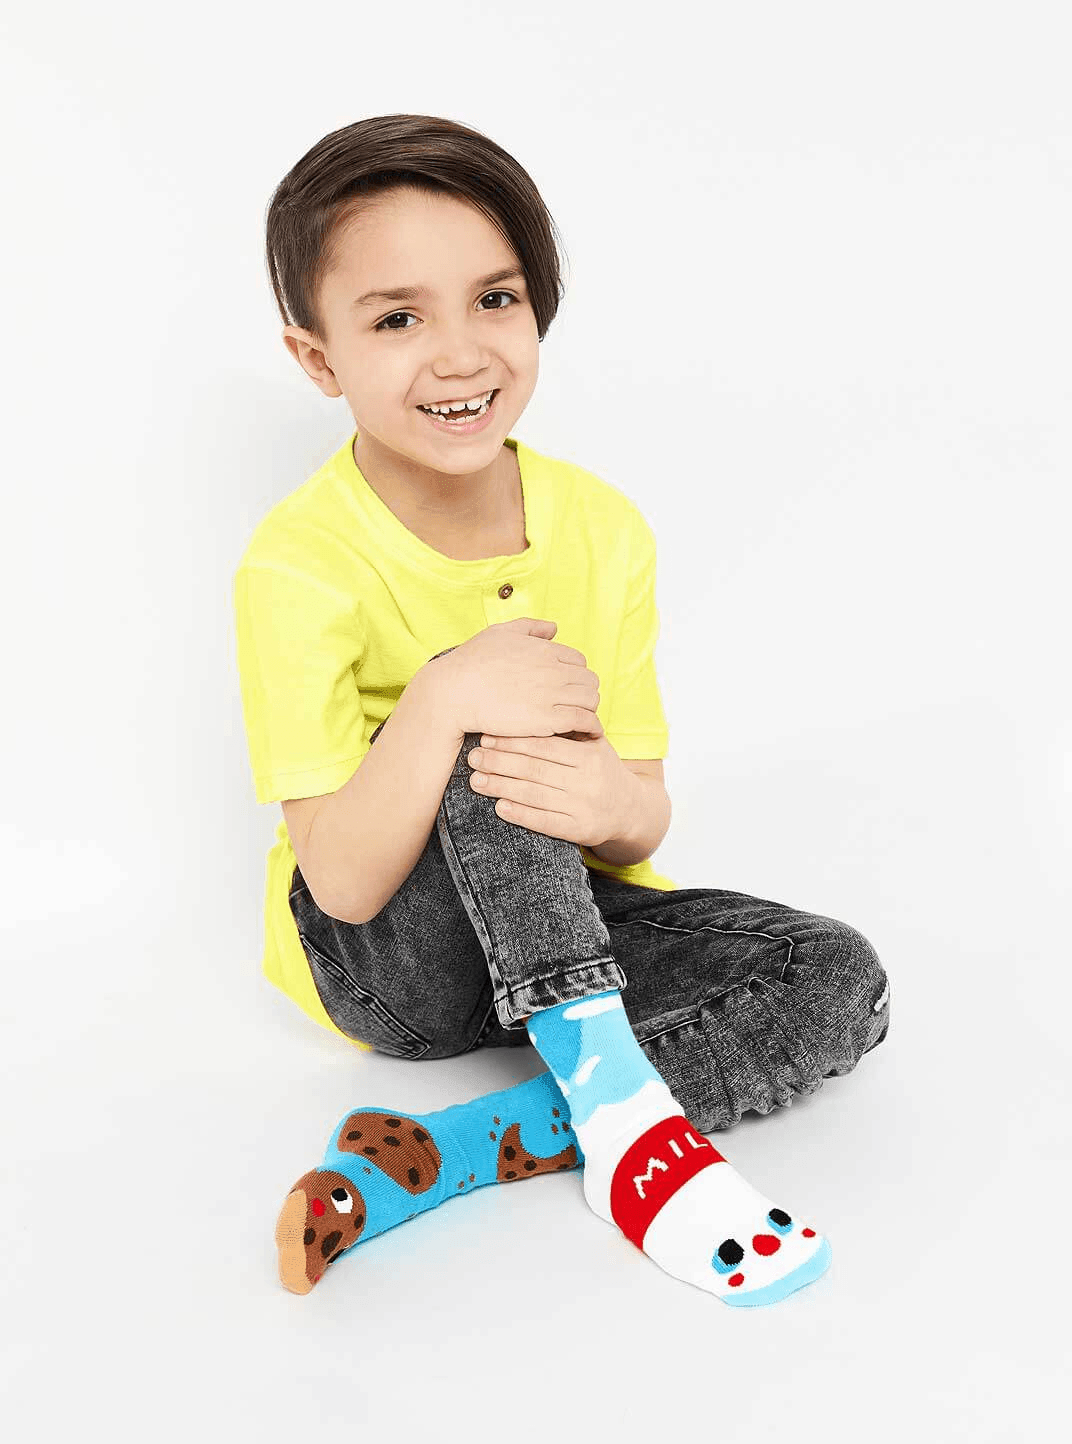 Milk & Cookies | Kids Socks | Mismatched Cute Crazy Fun Socks - Pals Socks - The Sock Monster